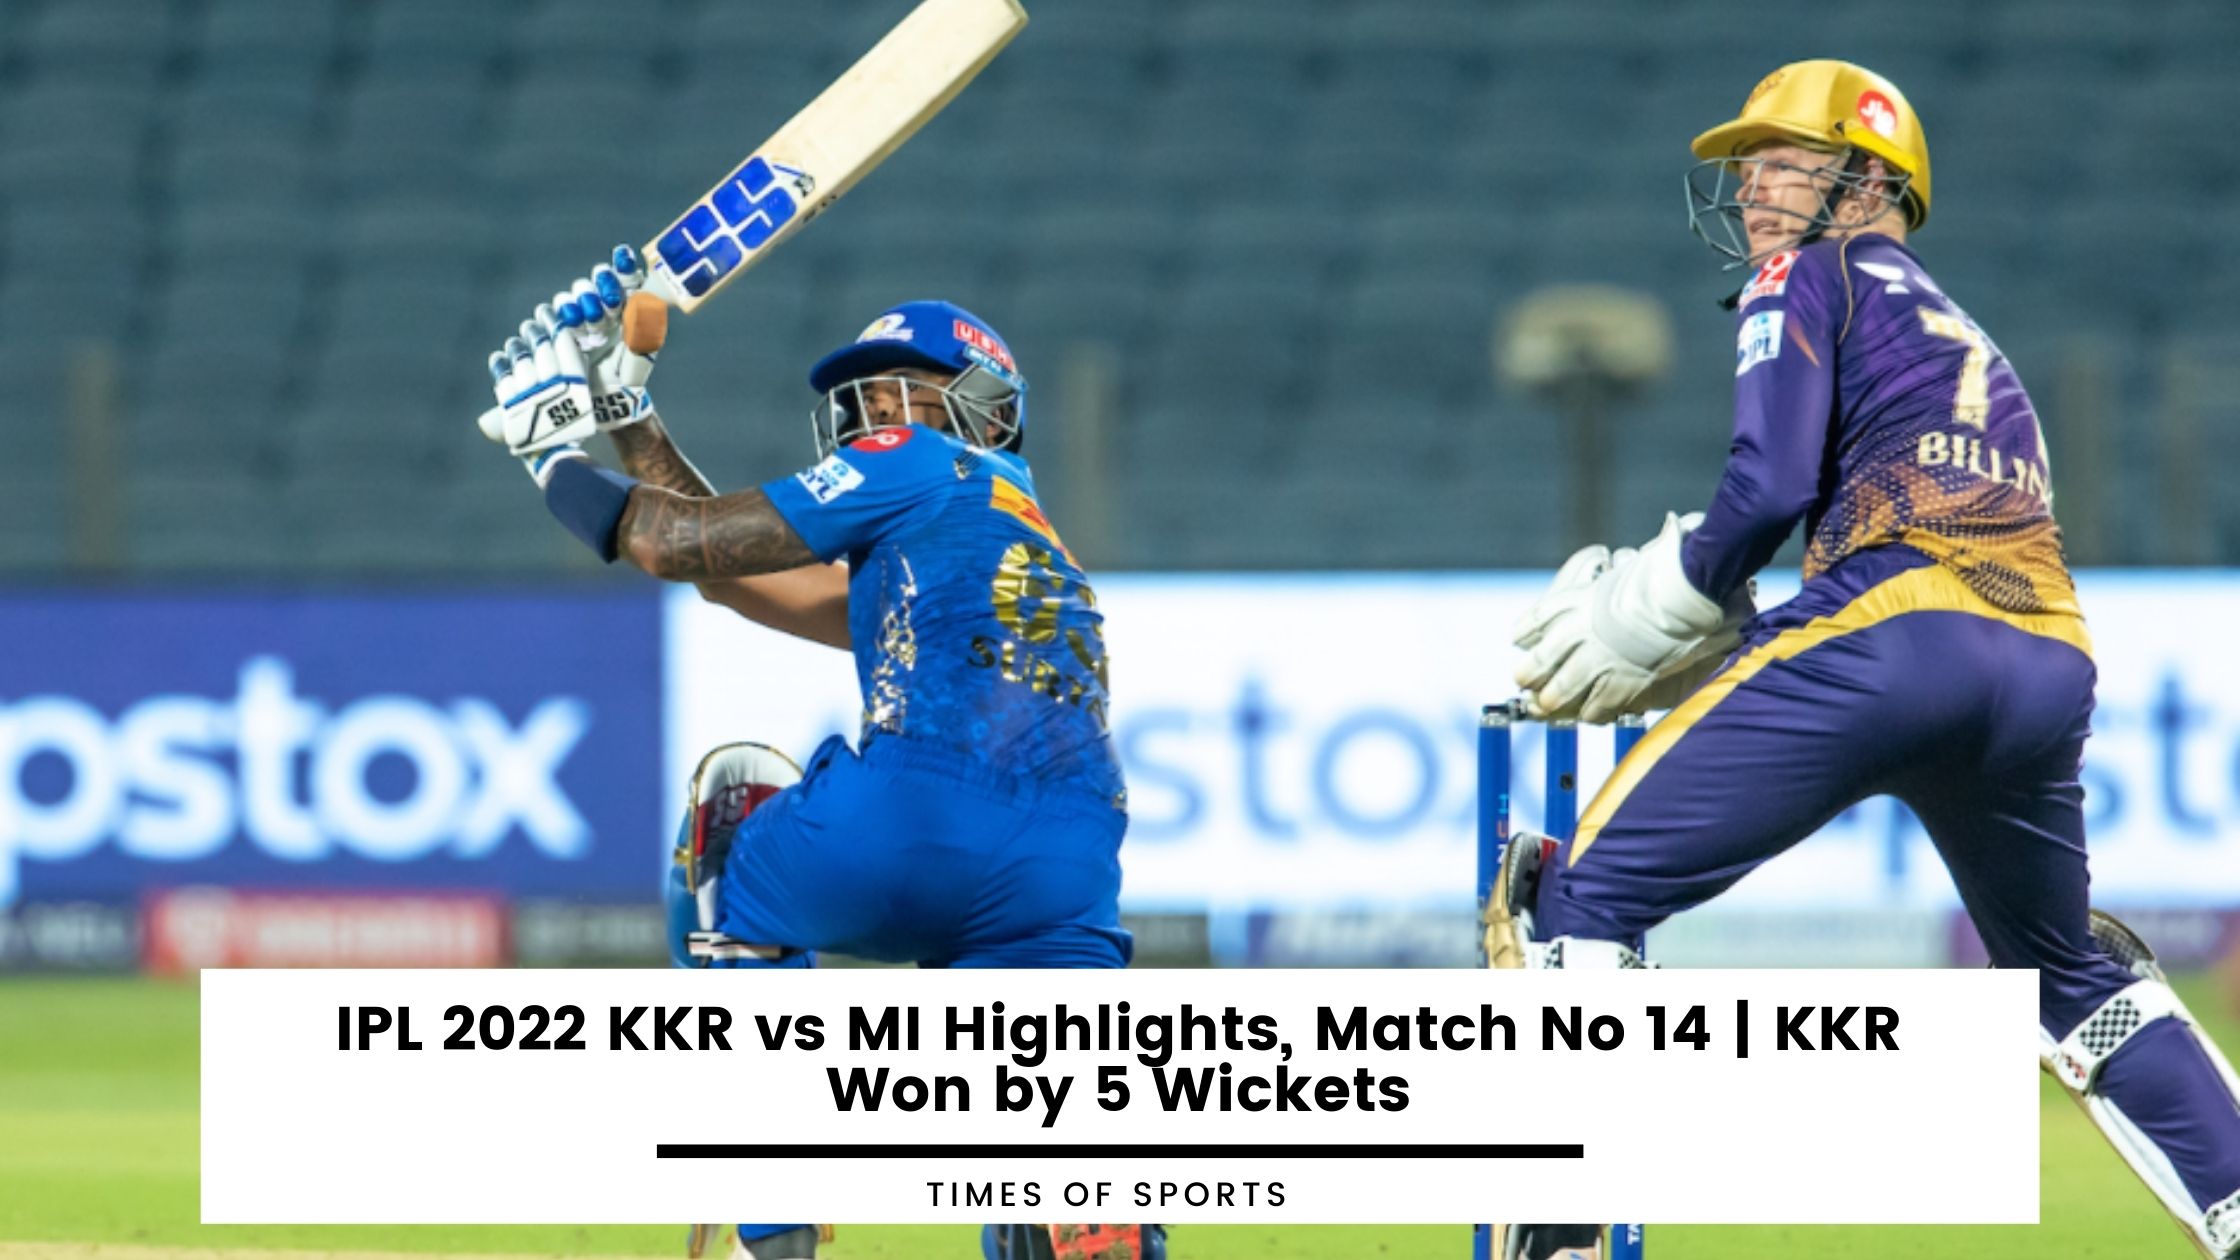 IPL 2022 KKR vs MI Highlights, Match No 14 KKR Won by 5 Wickets